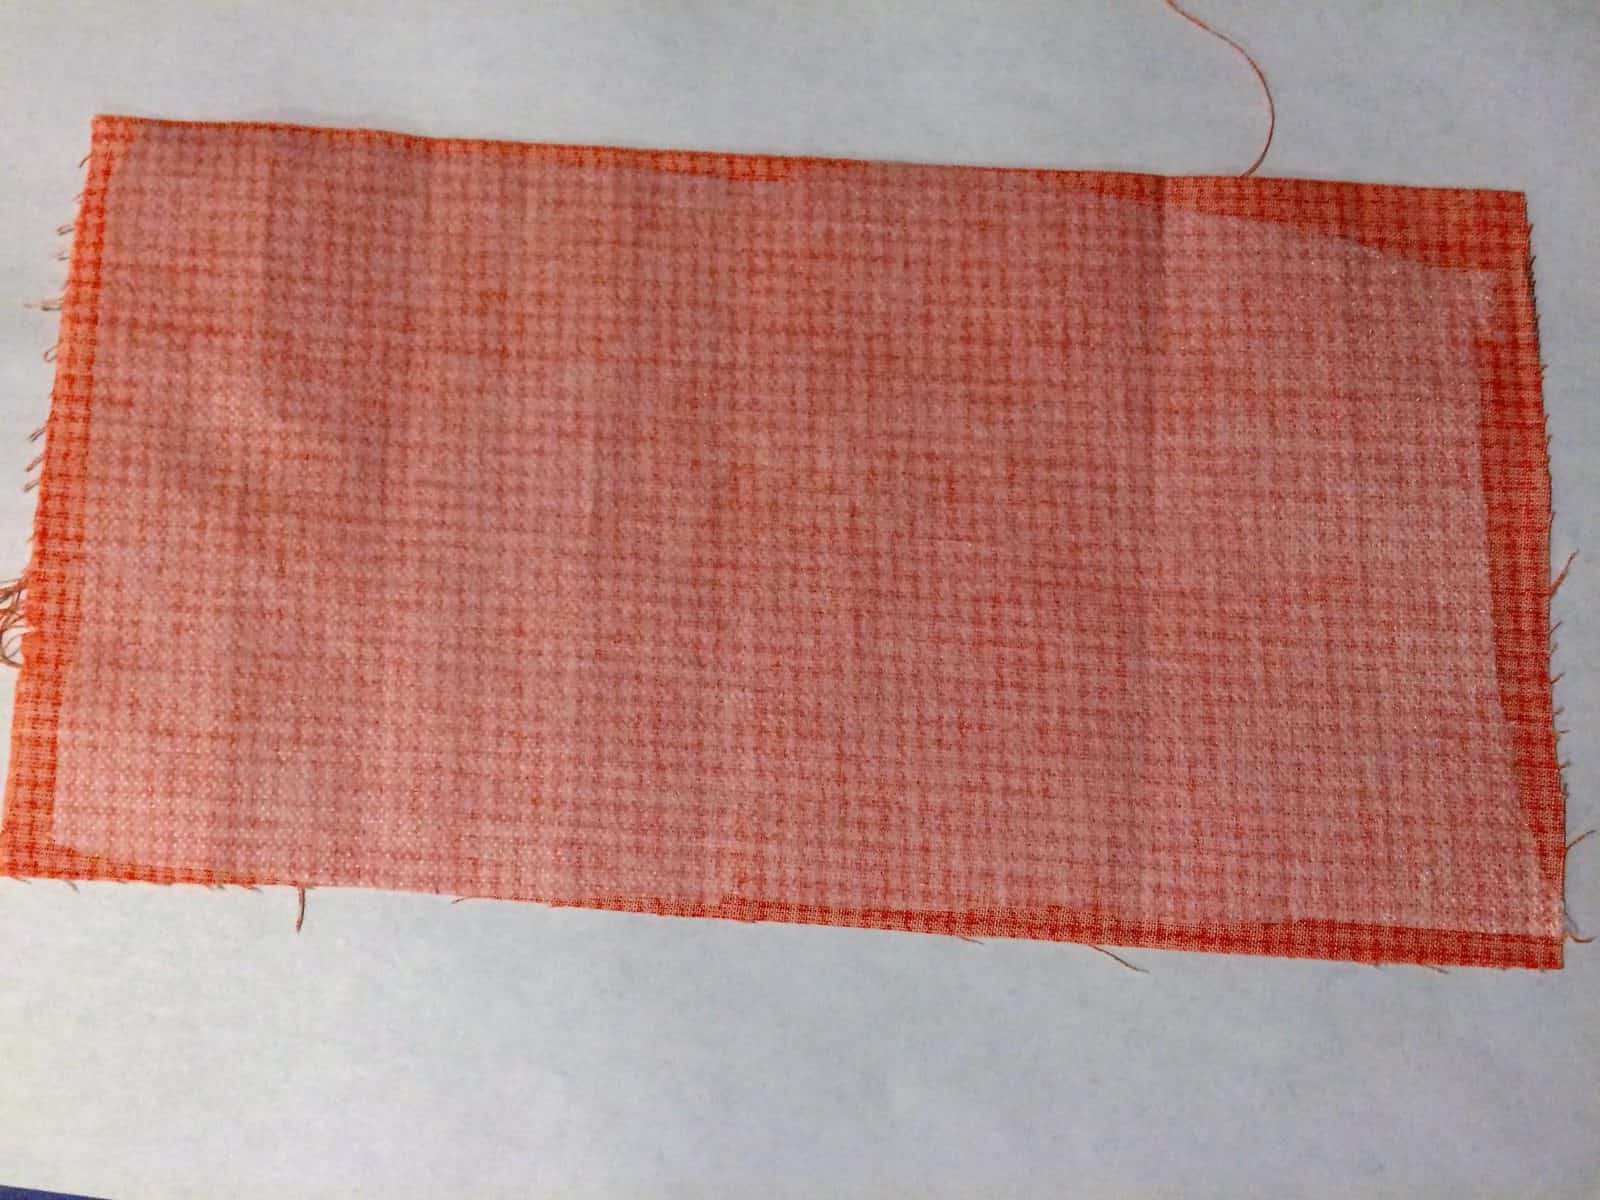 Interfacing on back of orange fabric rectangle.